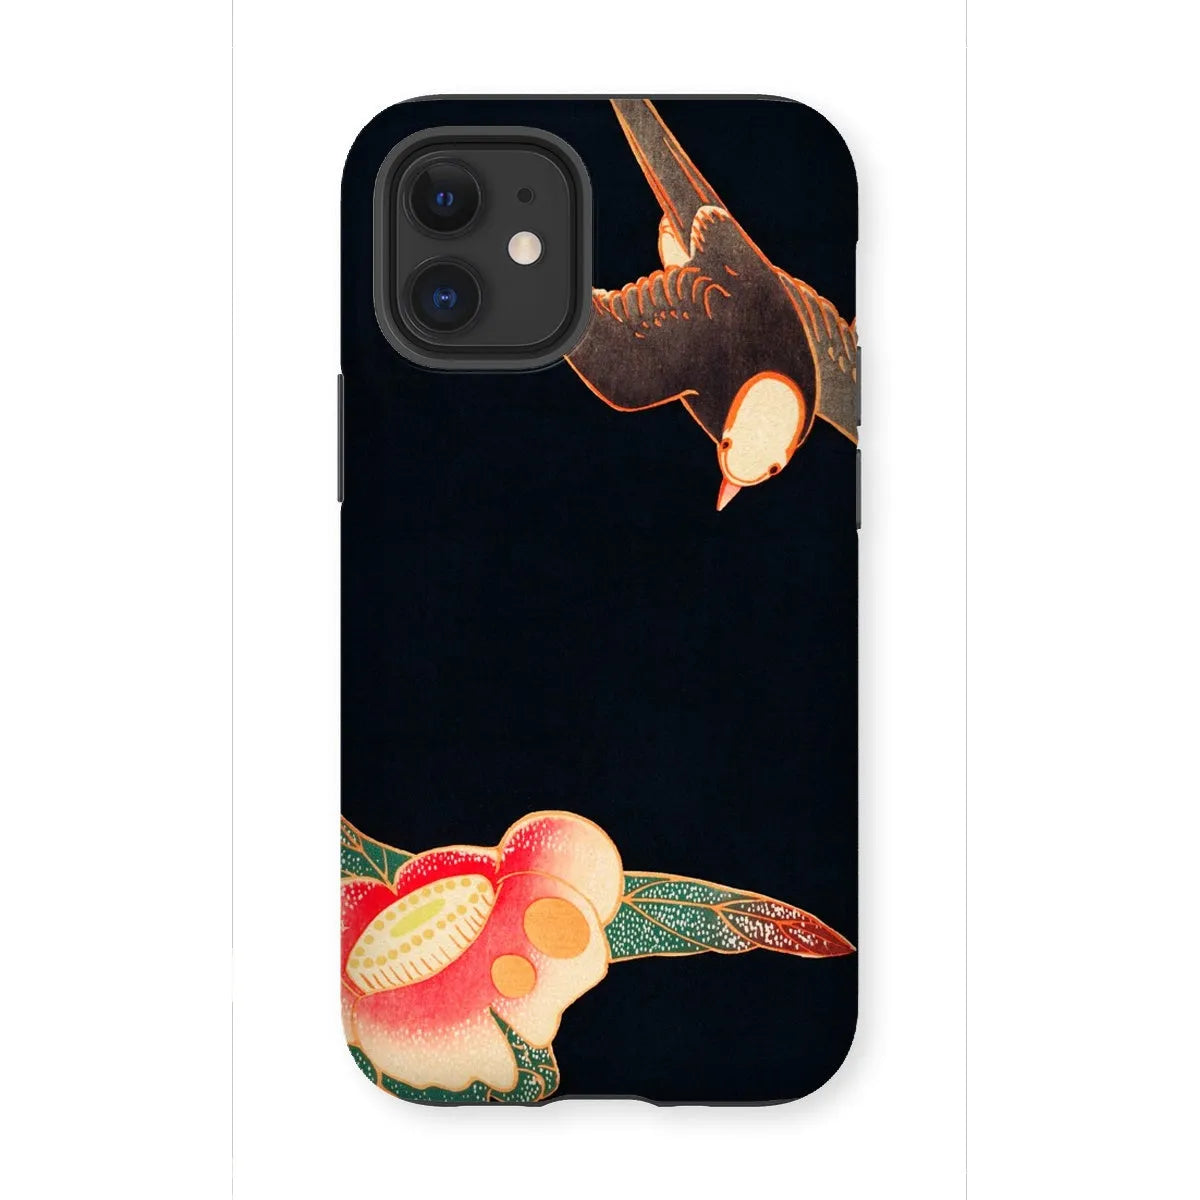 Swallow & Camellia - Meiji Era Art Phone Case - Ito Jakuchu - Iphone 12 Mini / Matte - Mobile Phone Cases - Aesthetic